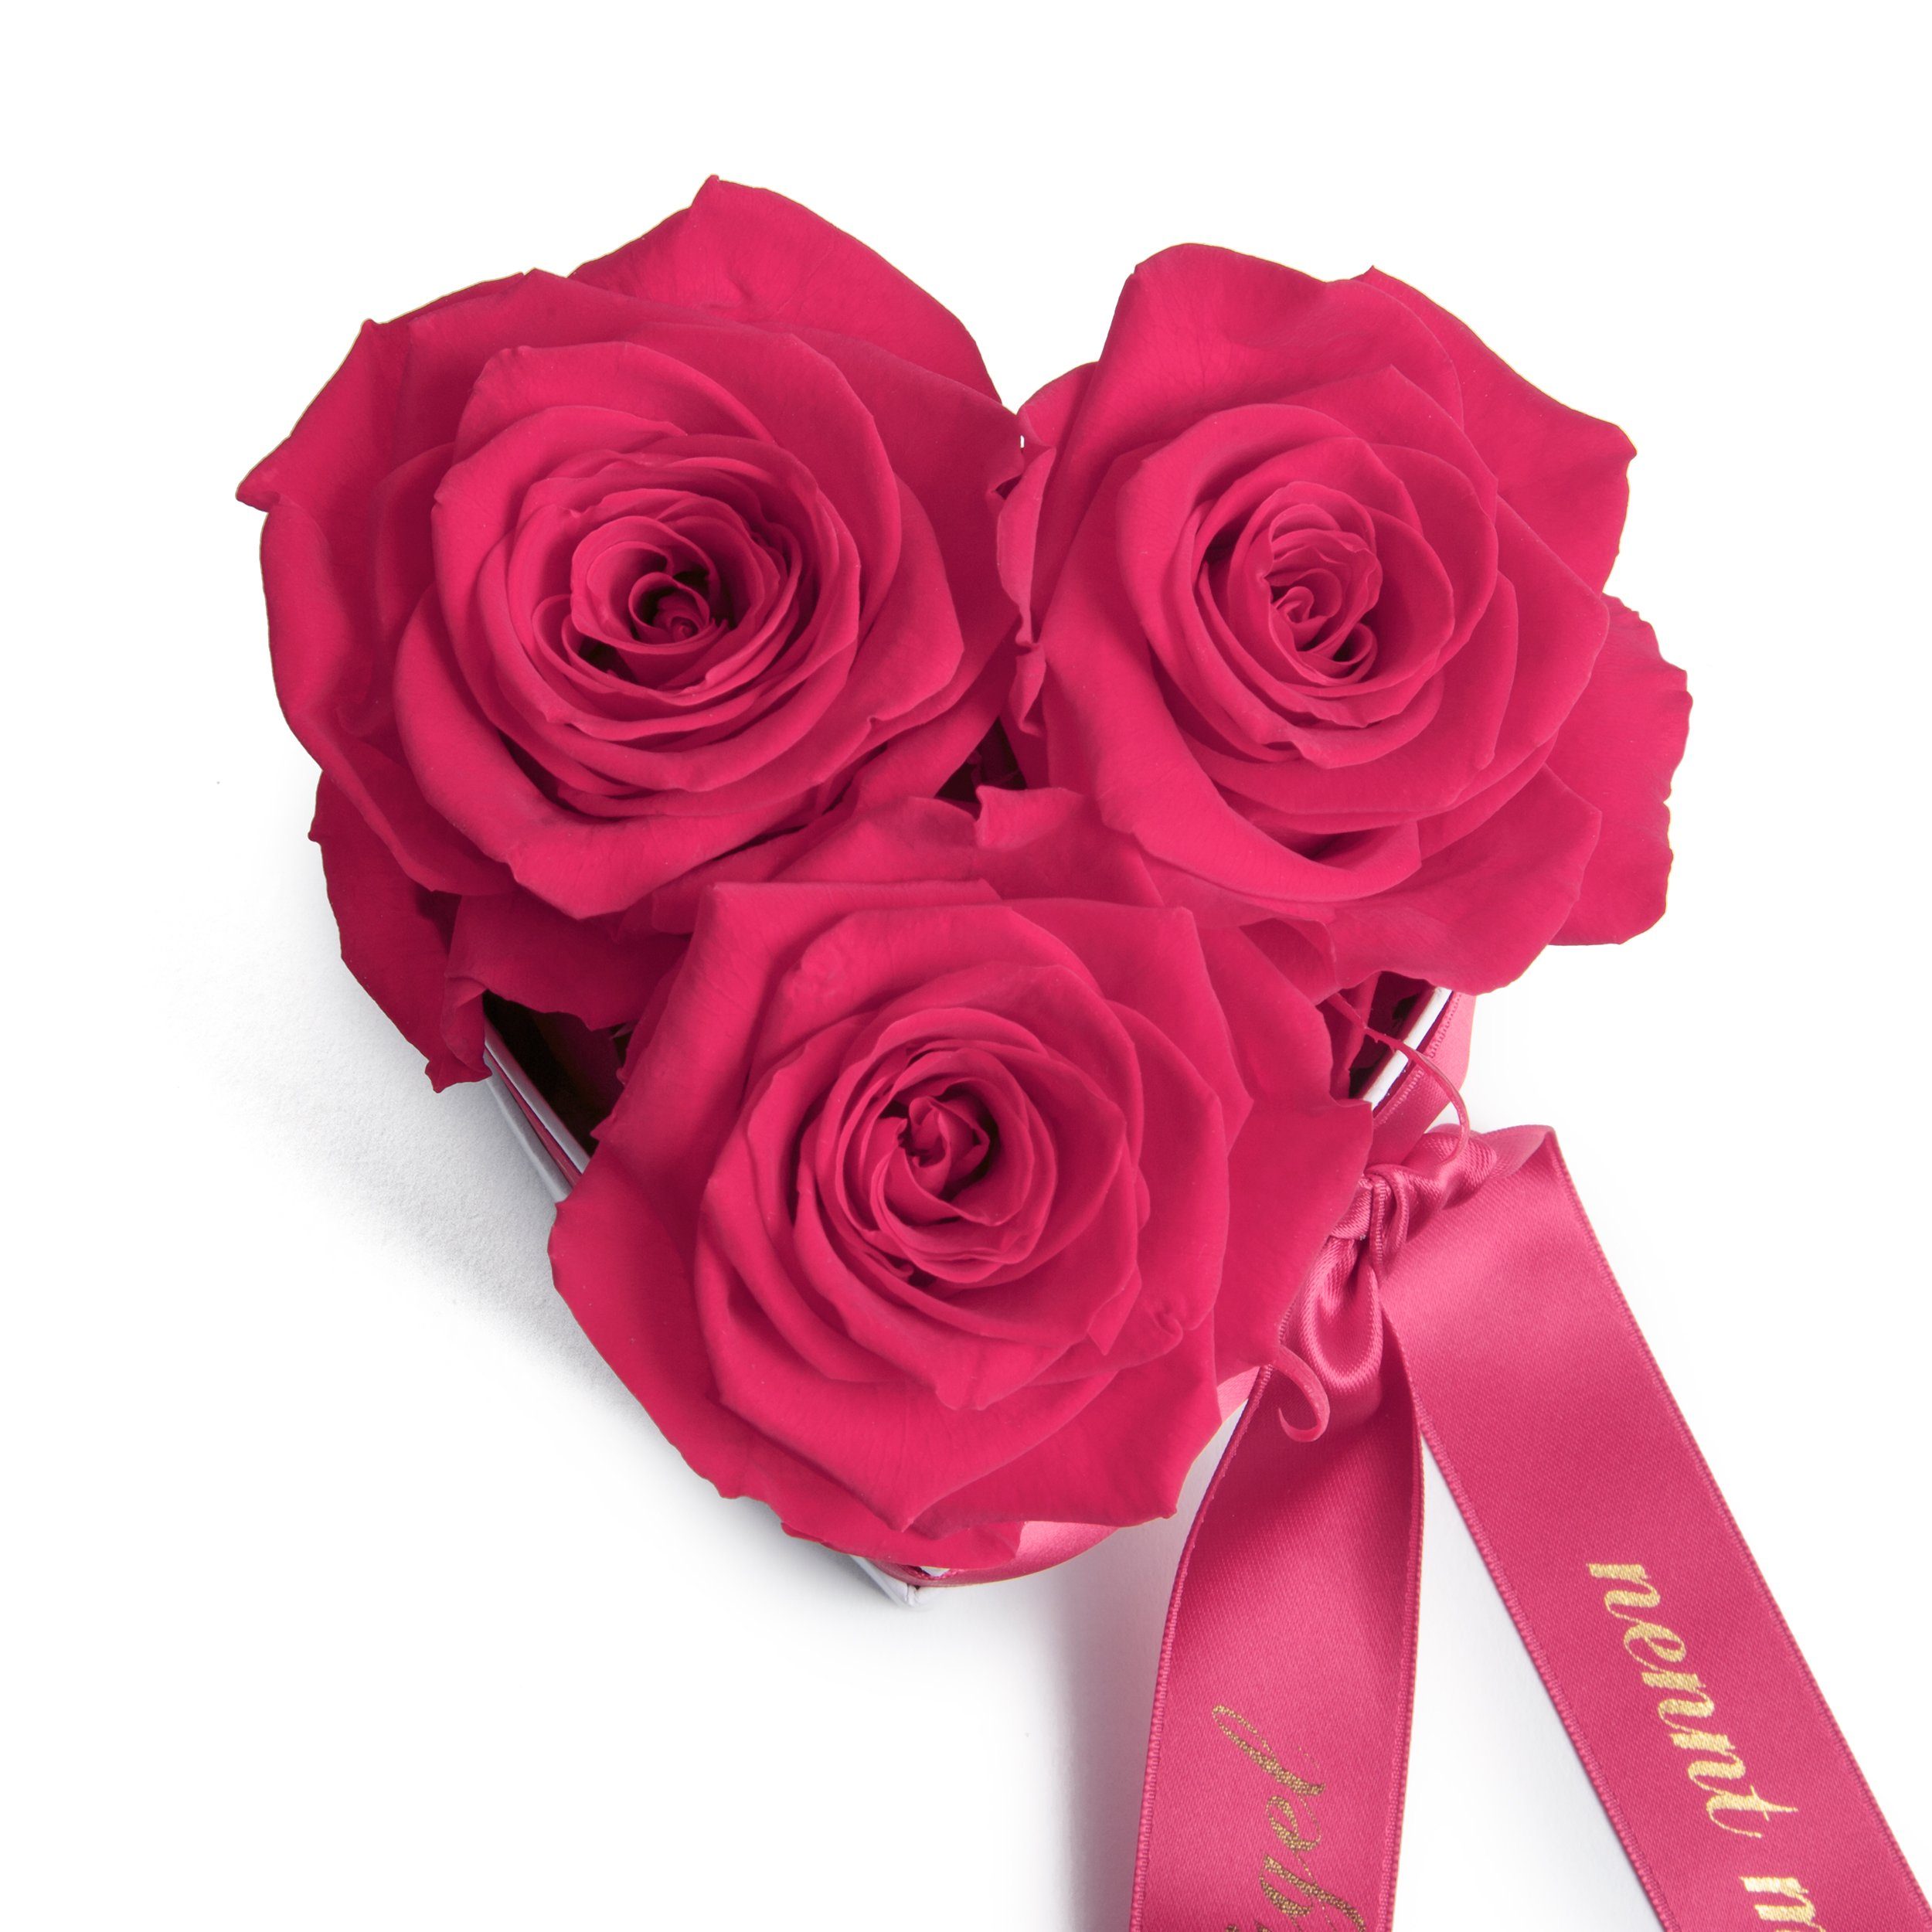 10 3 konserviert Herz Rose, Höhe Rosen haltbar man Mama Rosen ohne Heidelberg, Rosenbox Pink Flügel Kunstblume lange cm, Echte nennt ROSEMARIE SCHULZ Engel